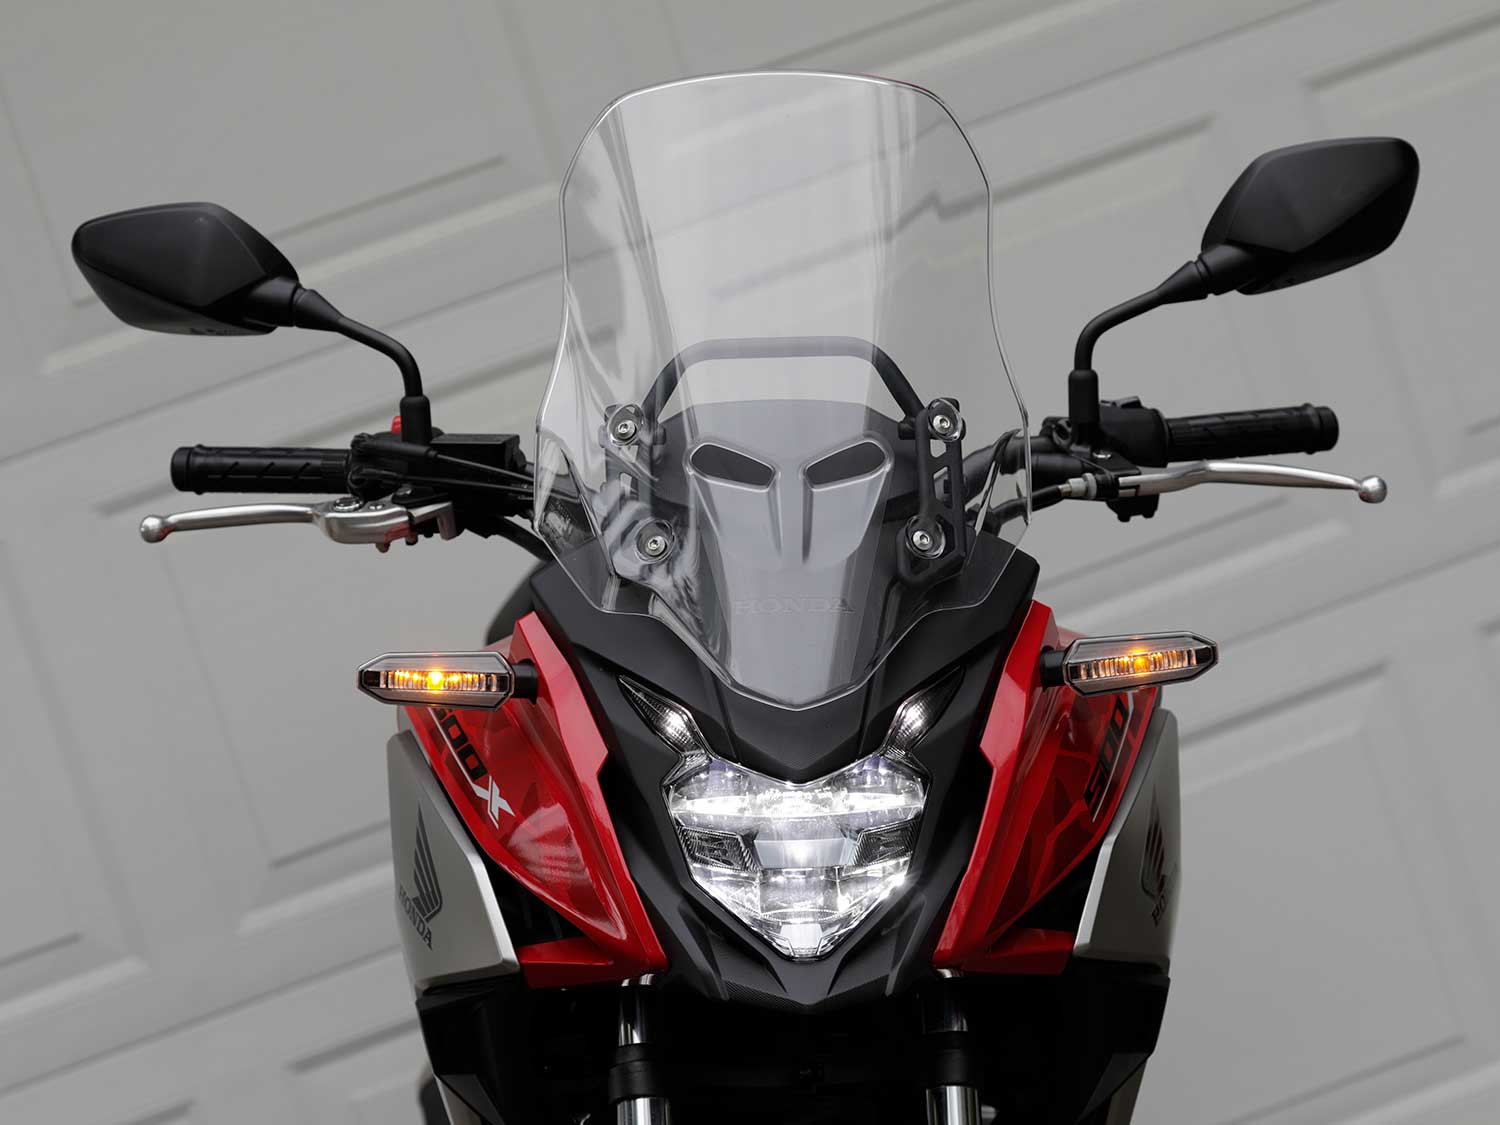 2023 Honda CB500X: Performance, Price, And Photos